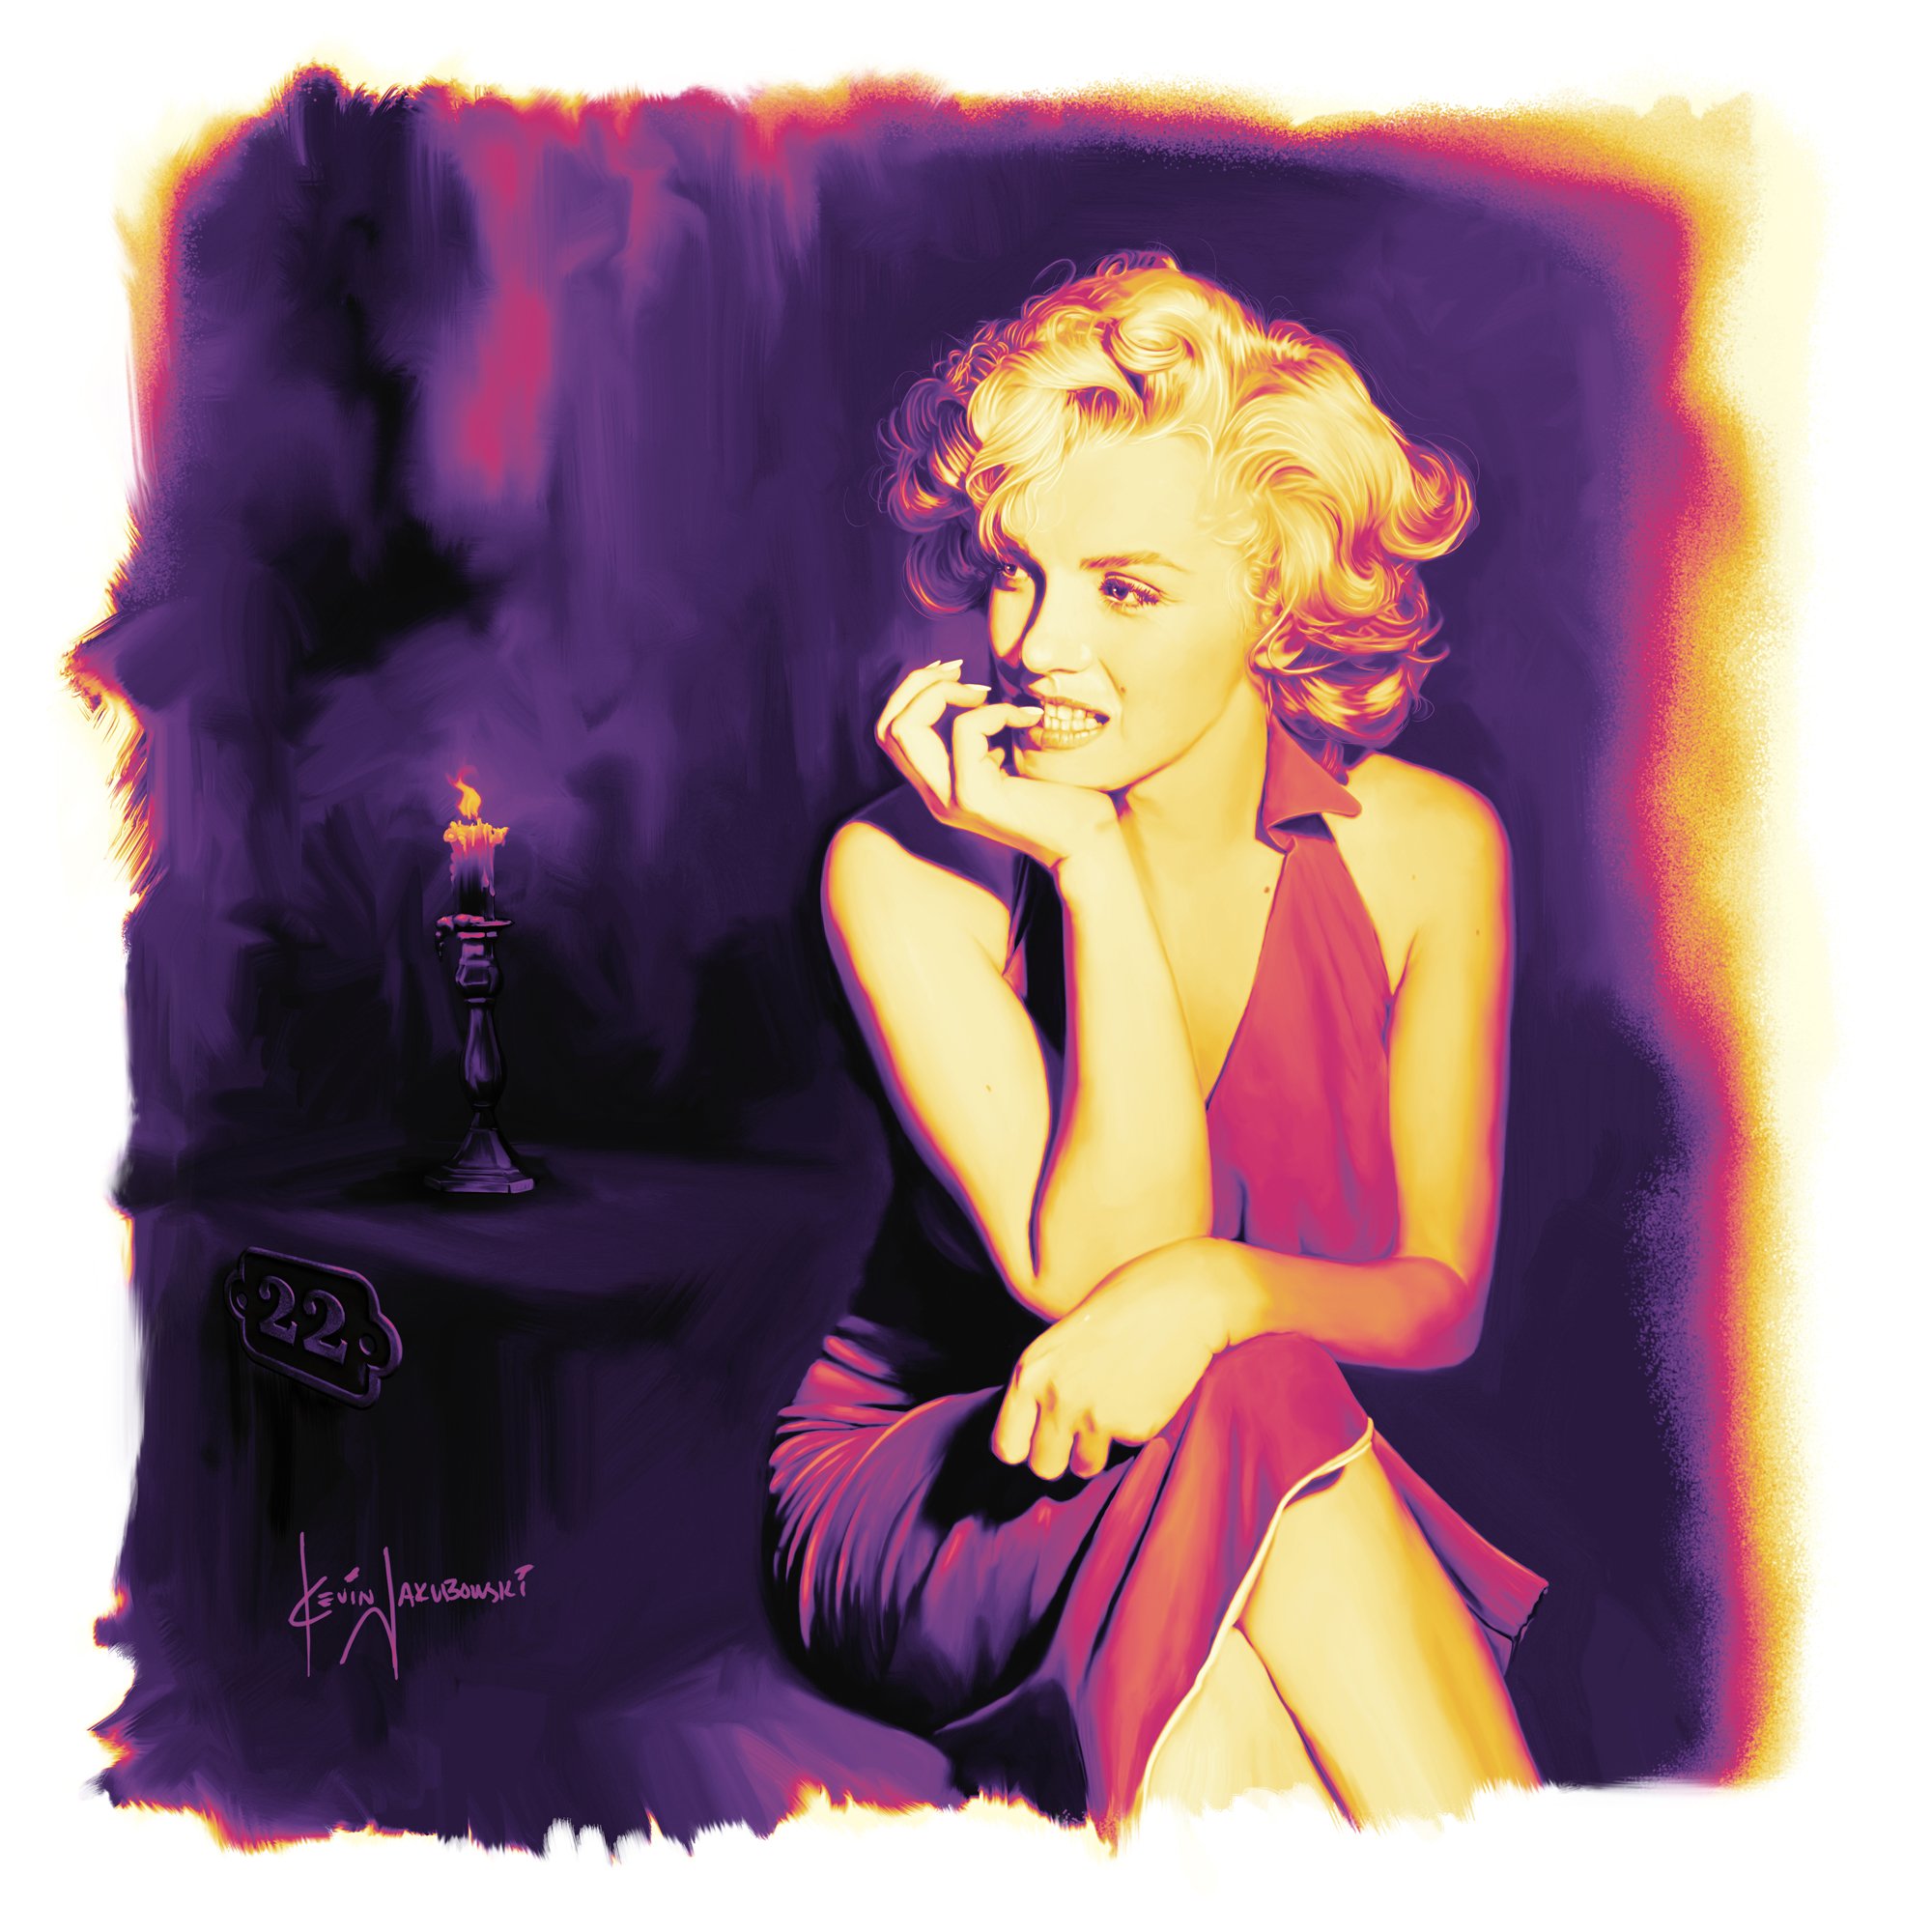 Marilyn-Candle-10312023-2000px.jpg